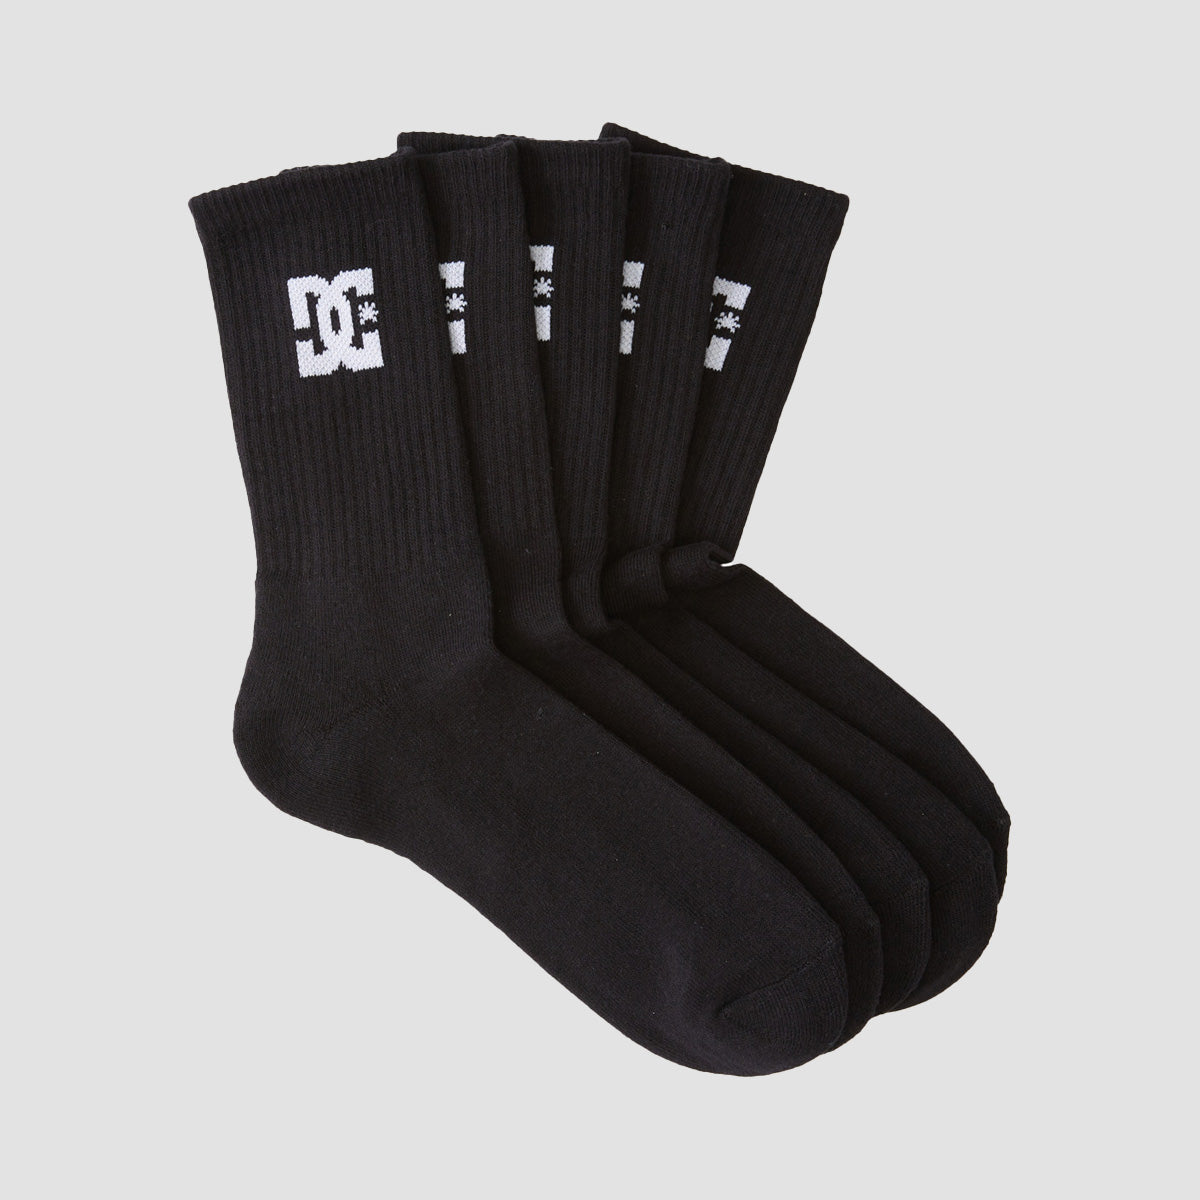 DC Crew Socks 5 Pack Black